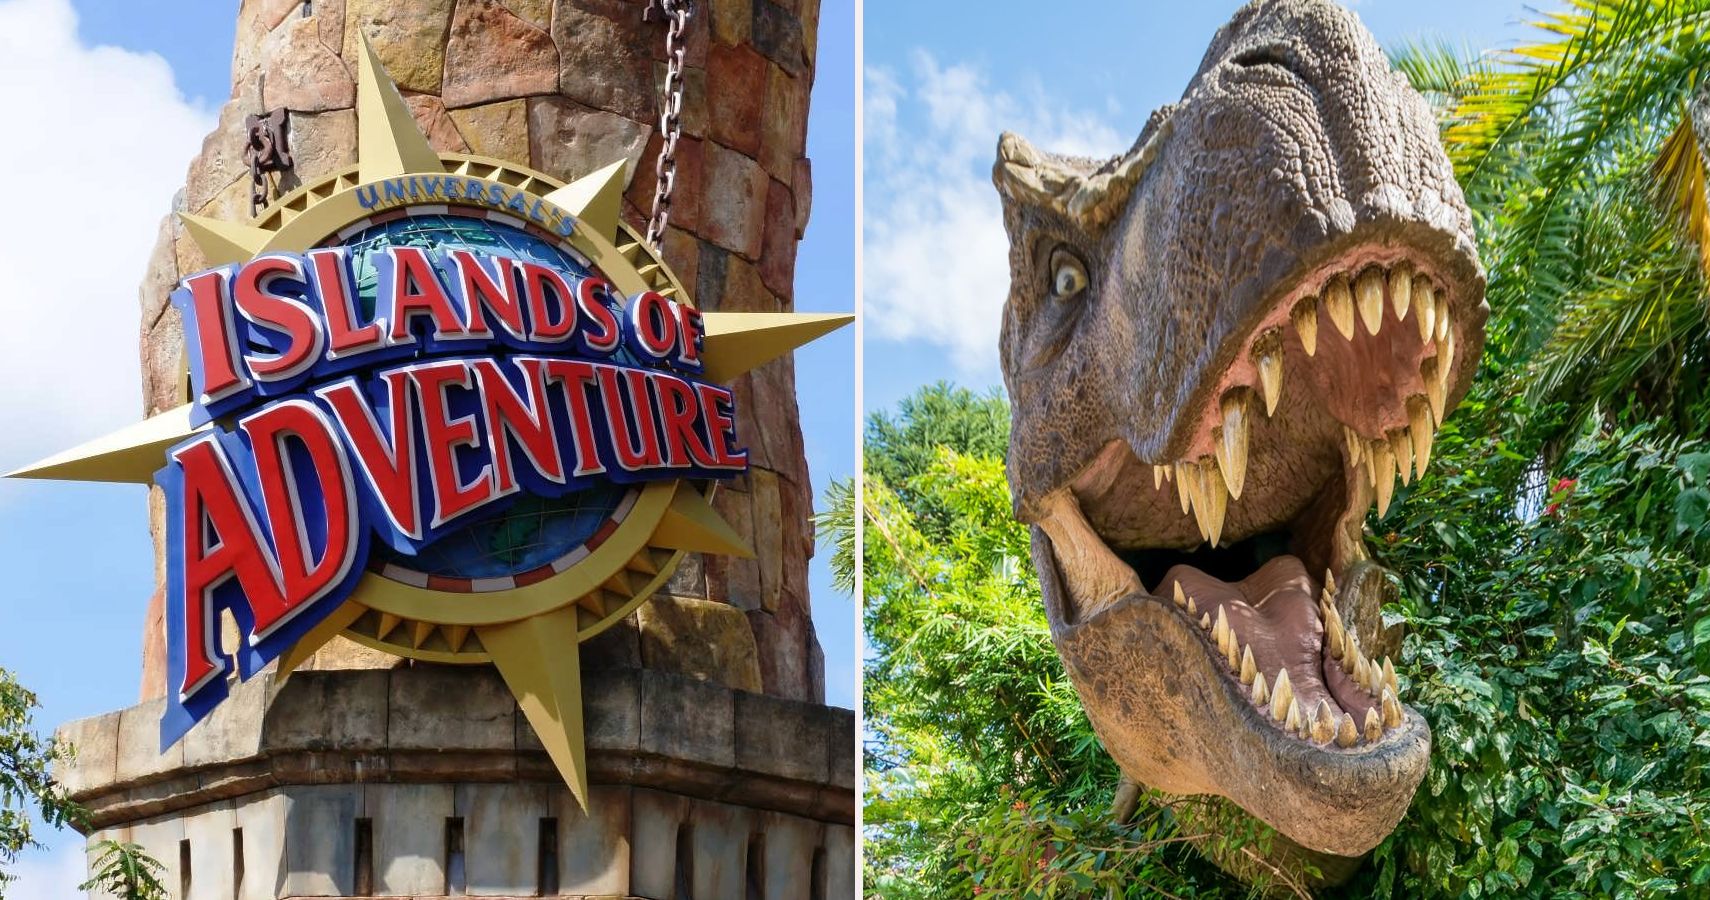 Universal Orlando and Islands of Adventure Movie Rides, Ranked